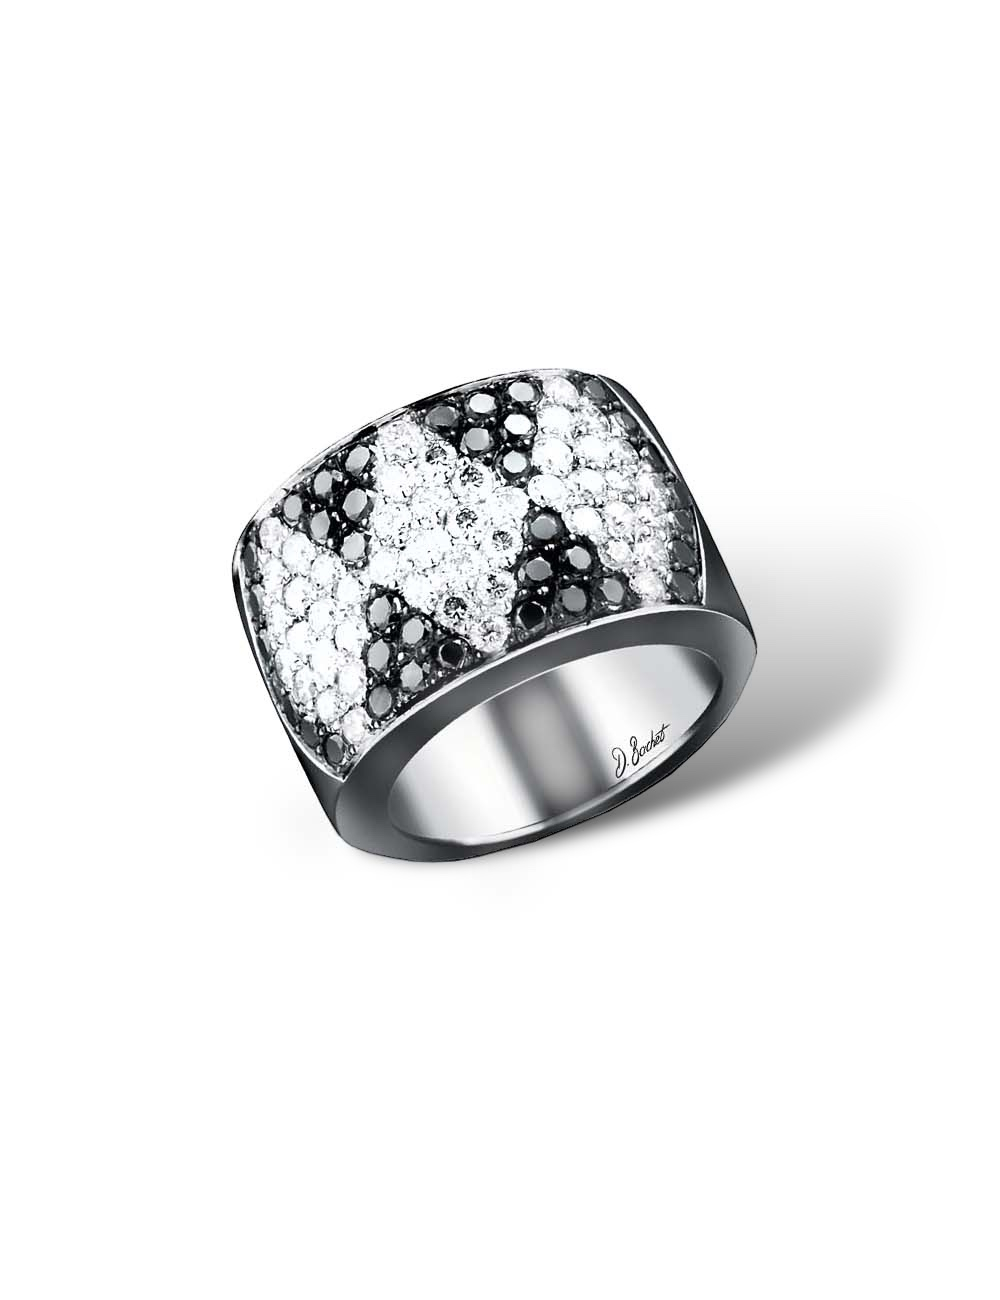 Elegant ring from the Charleston line, blending white and black diamonds, symbol of French sophistication and ethics.